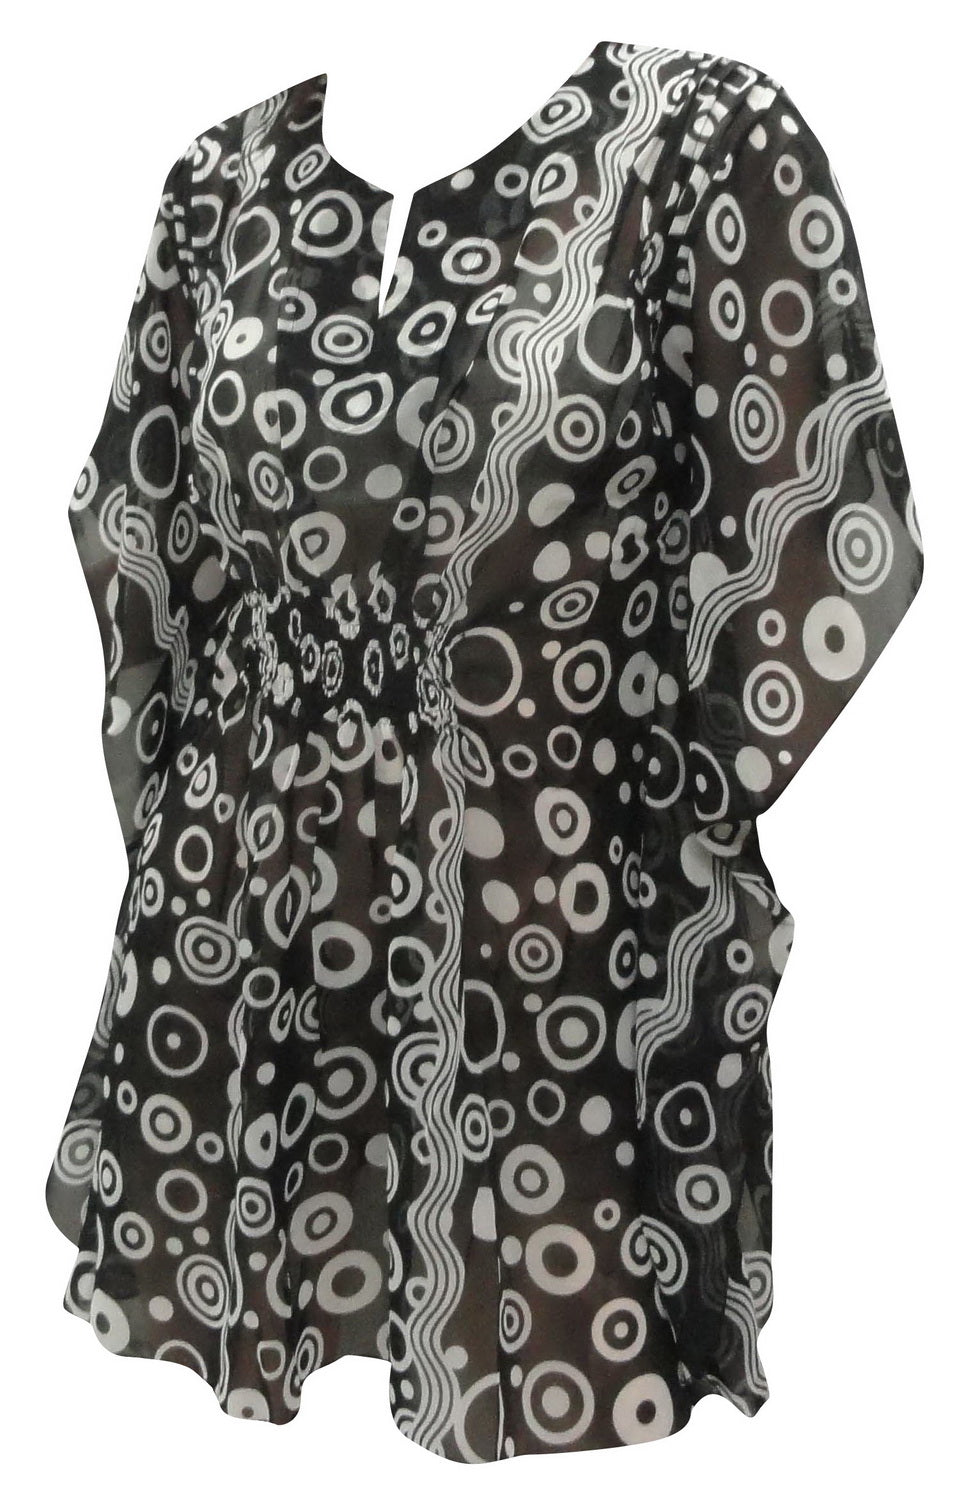 LA LEELA Women's Casual Chiffon Blouse Sweet Heart Neck 3/4 Sleeve Top Shirts US 8-14 Black_C478